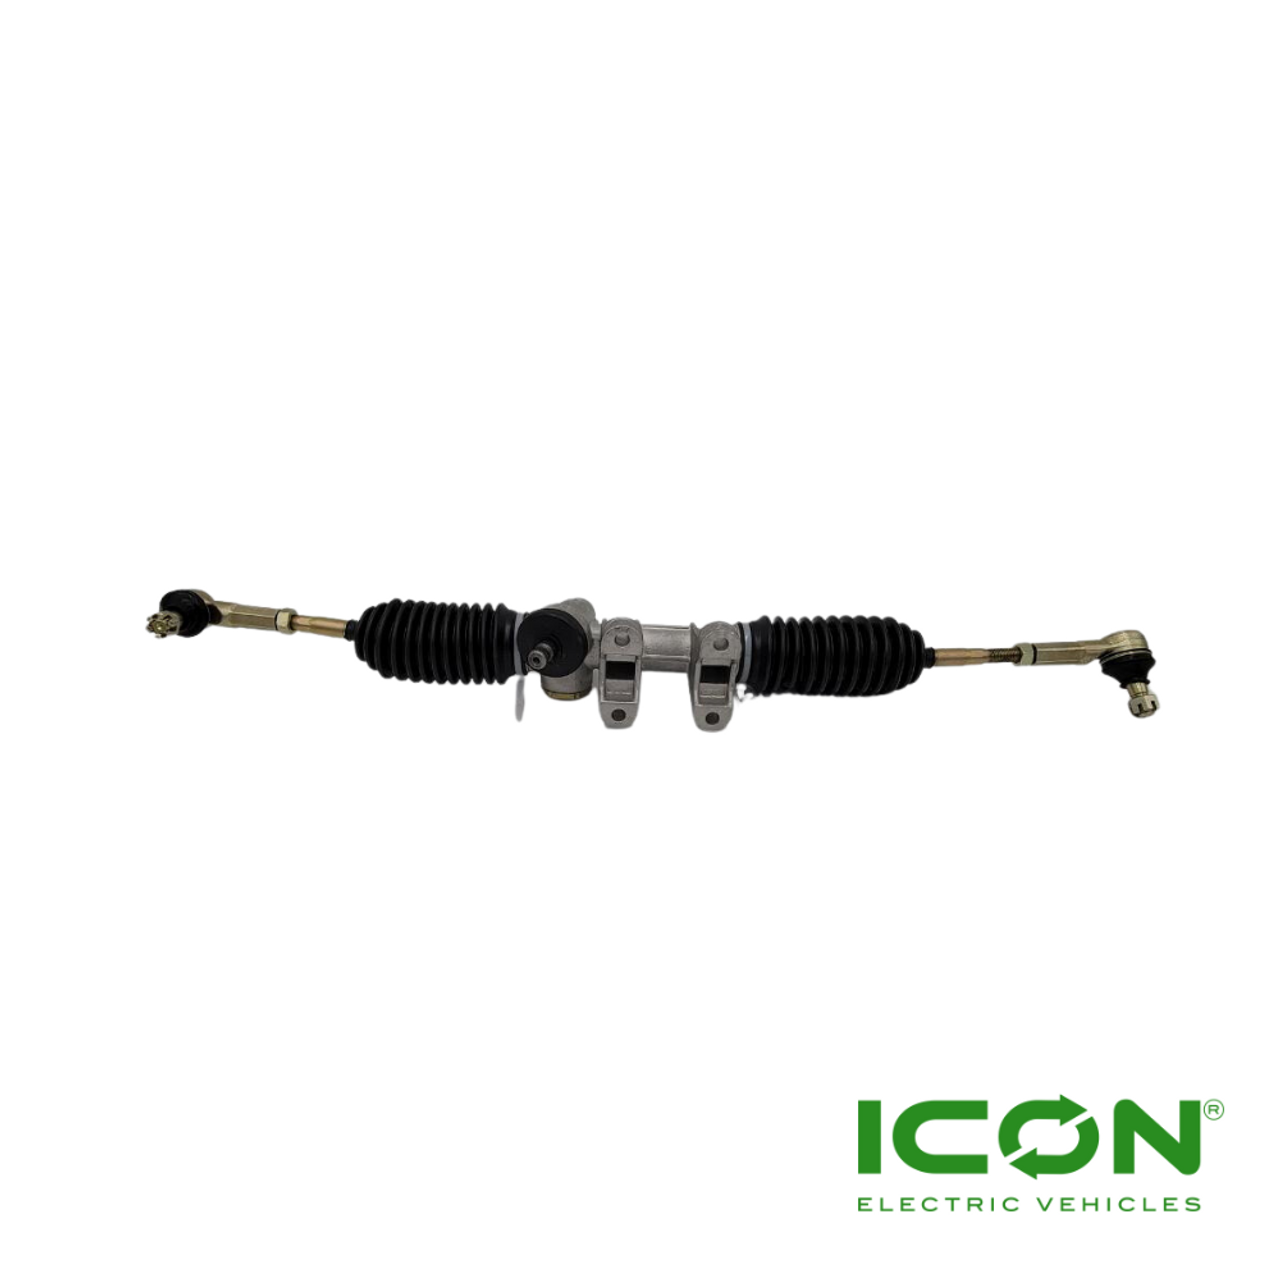 Steering Rack for ICON i40L, i40FL, i60L Golf Cart (Lifted Models Only)